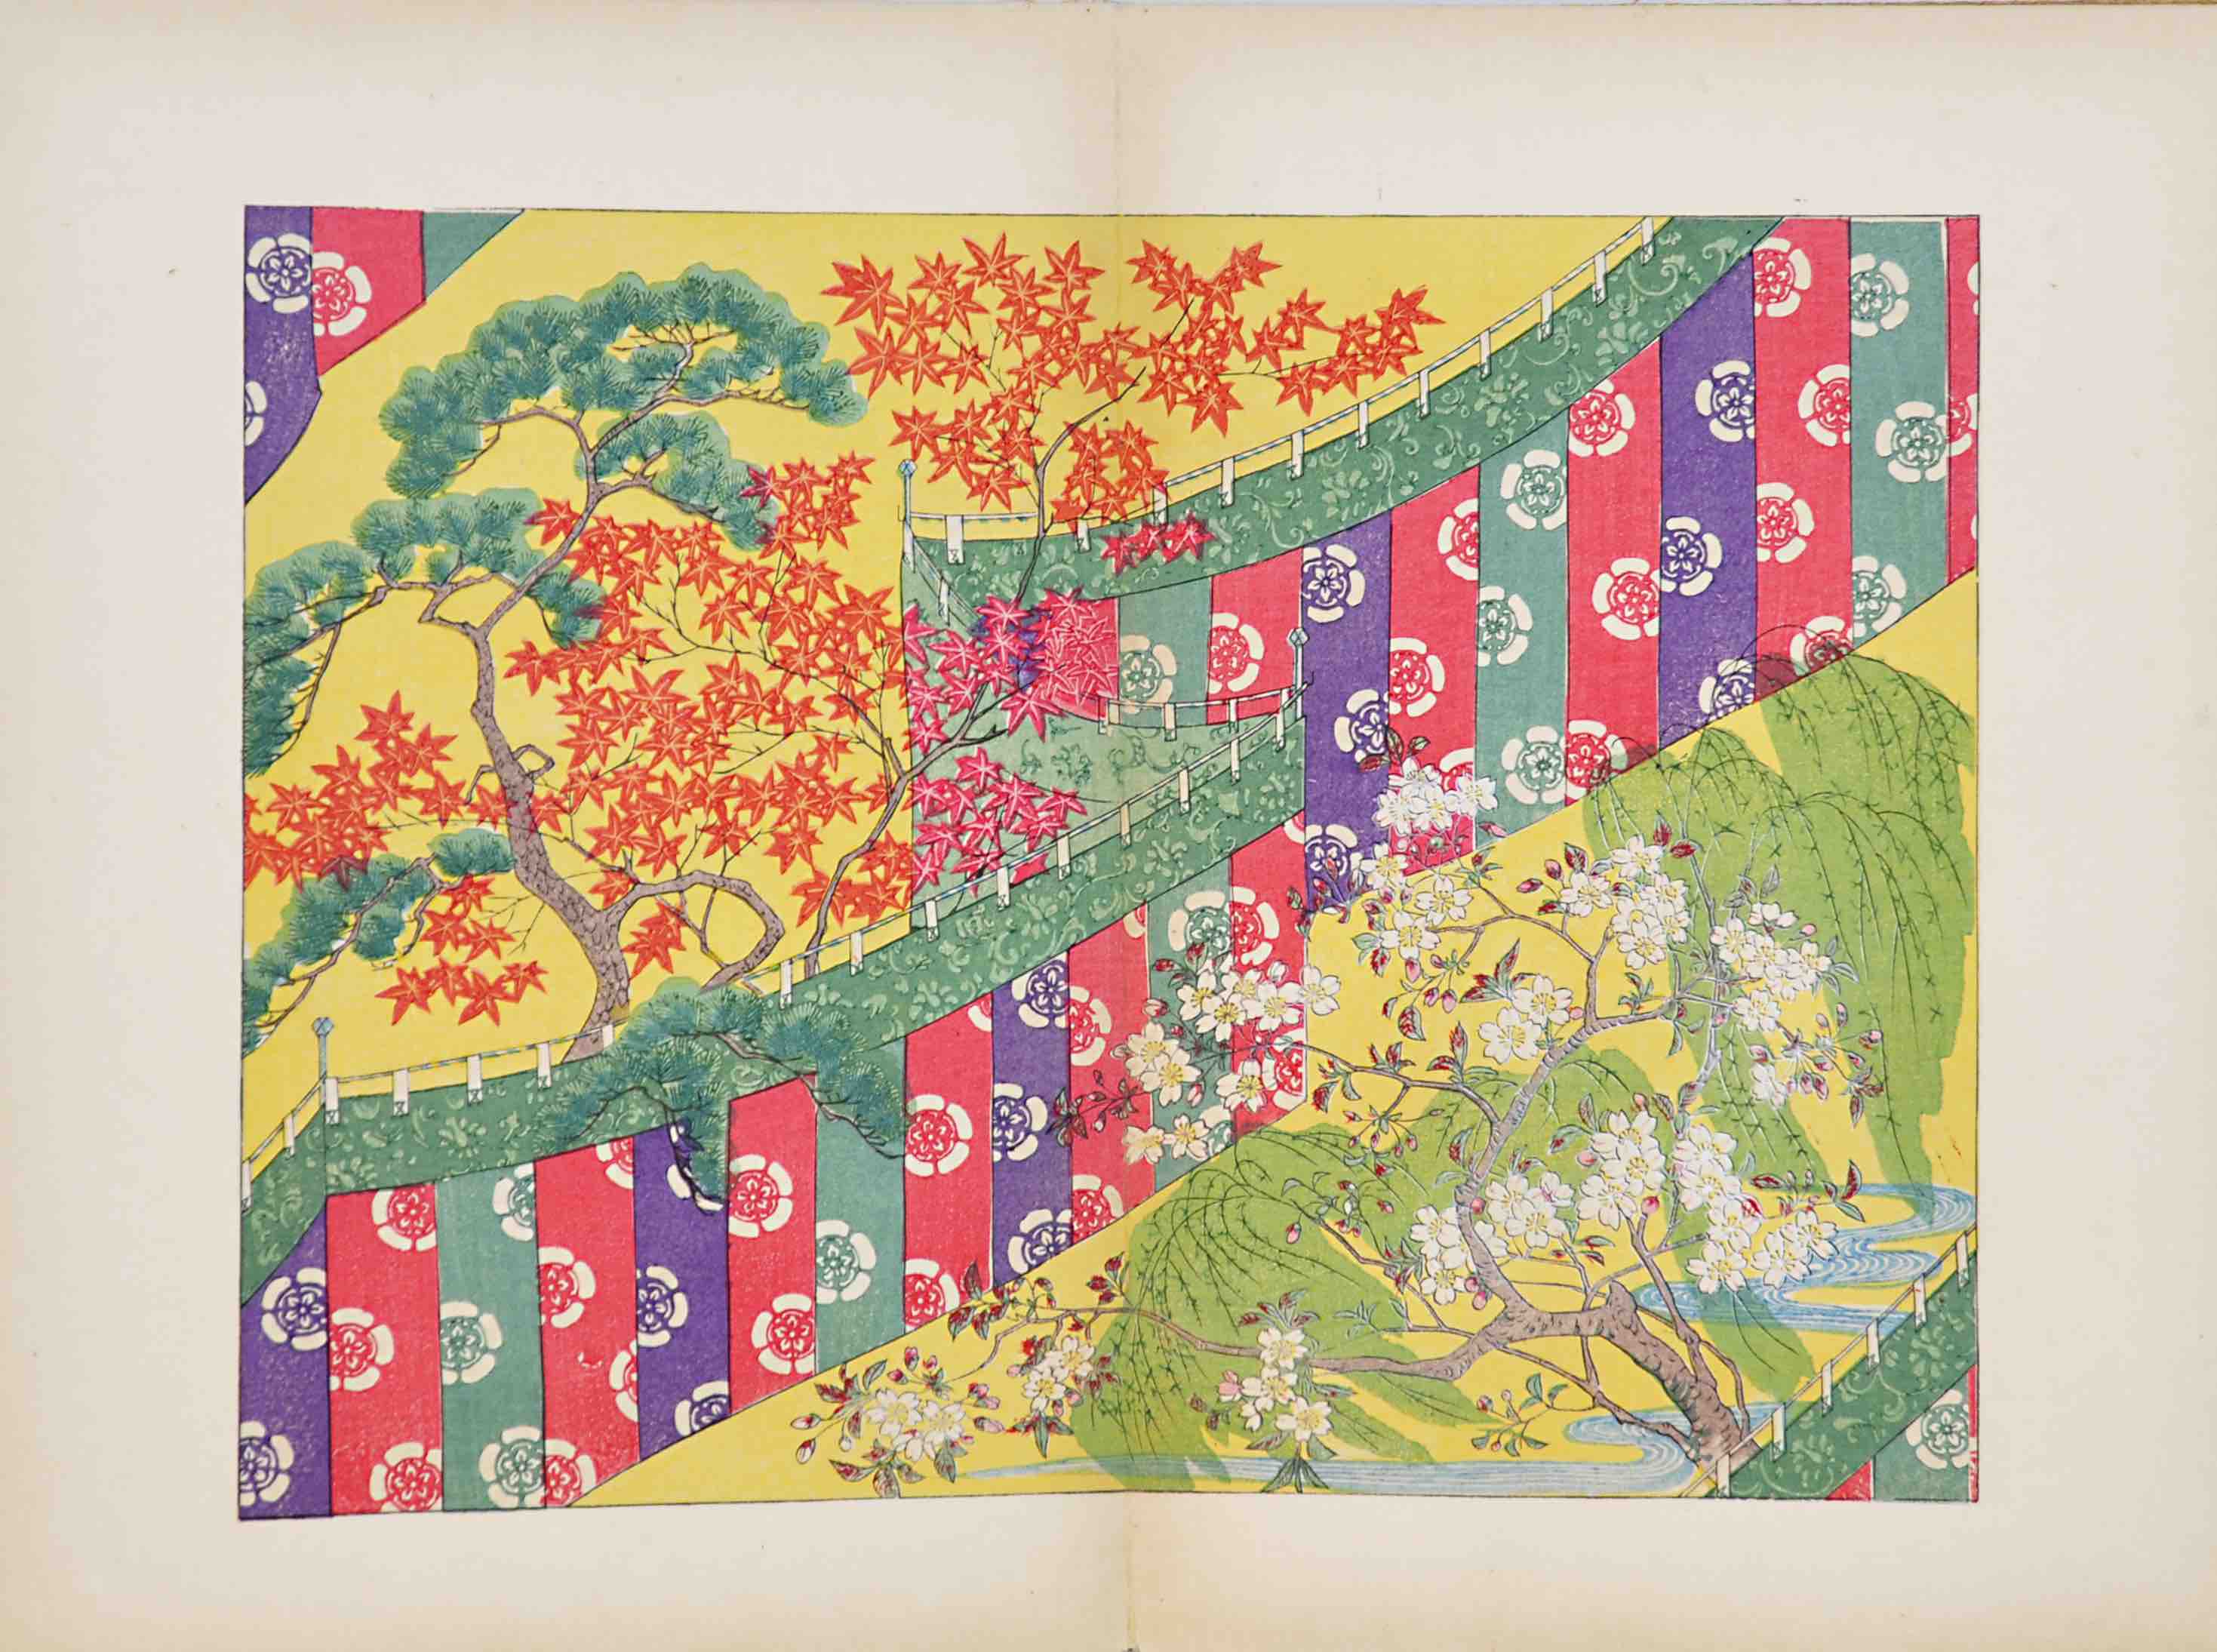 KAN, SHUH: - Chiyo irogami      (Old paper designs). Kyoto, Unsodo, Showa 11 (1936).